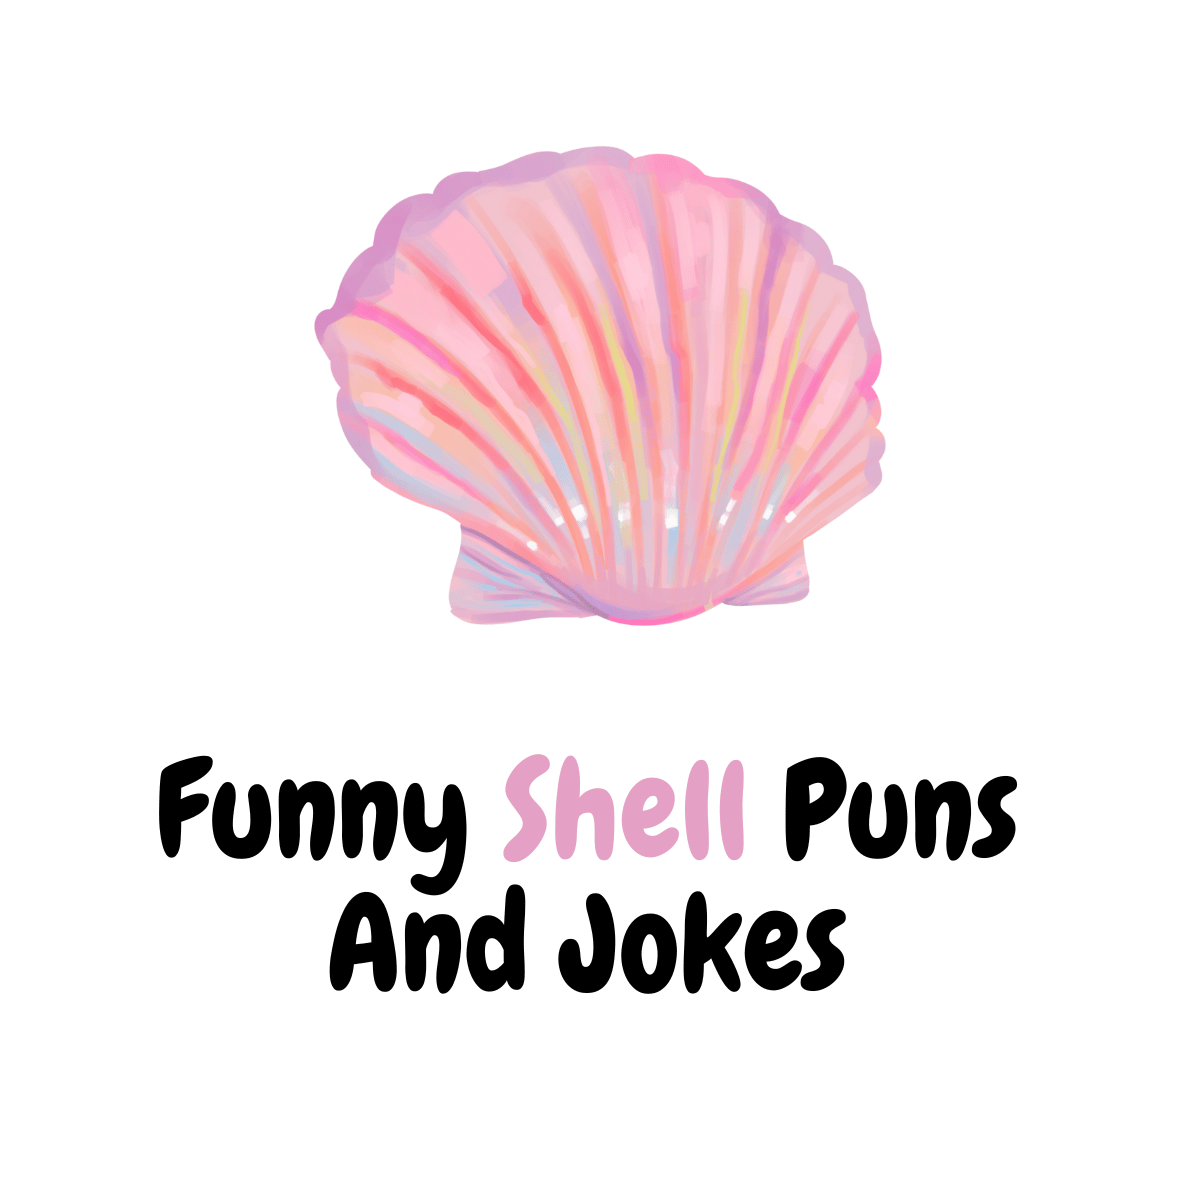 Funny Shell Puns And Jokes